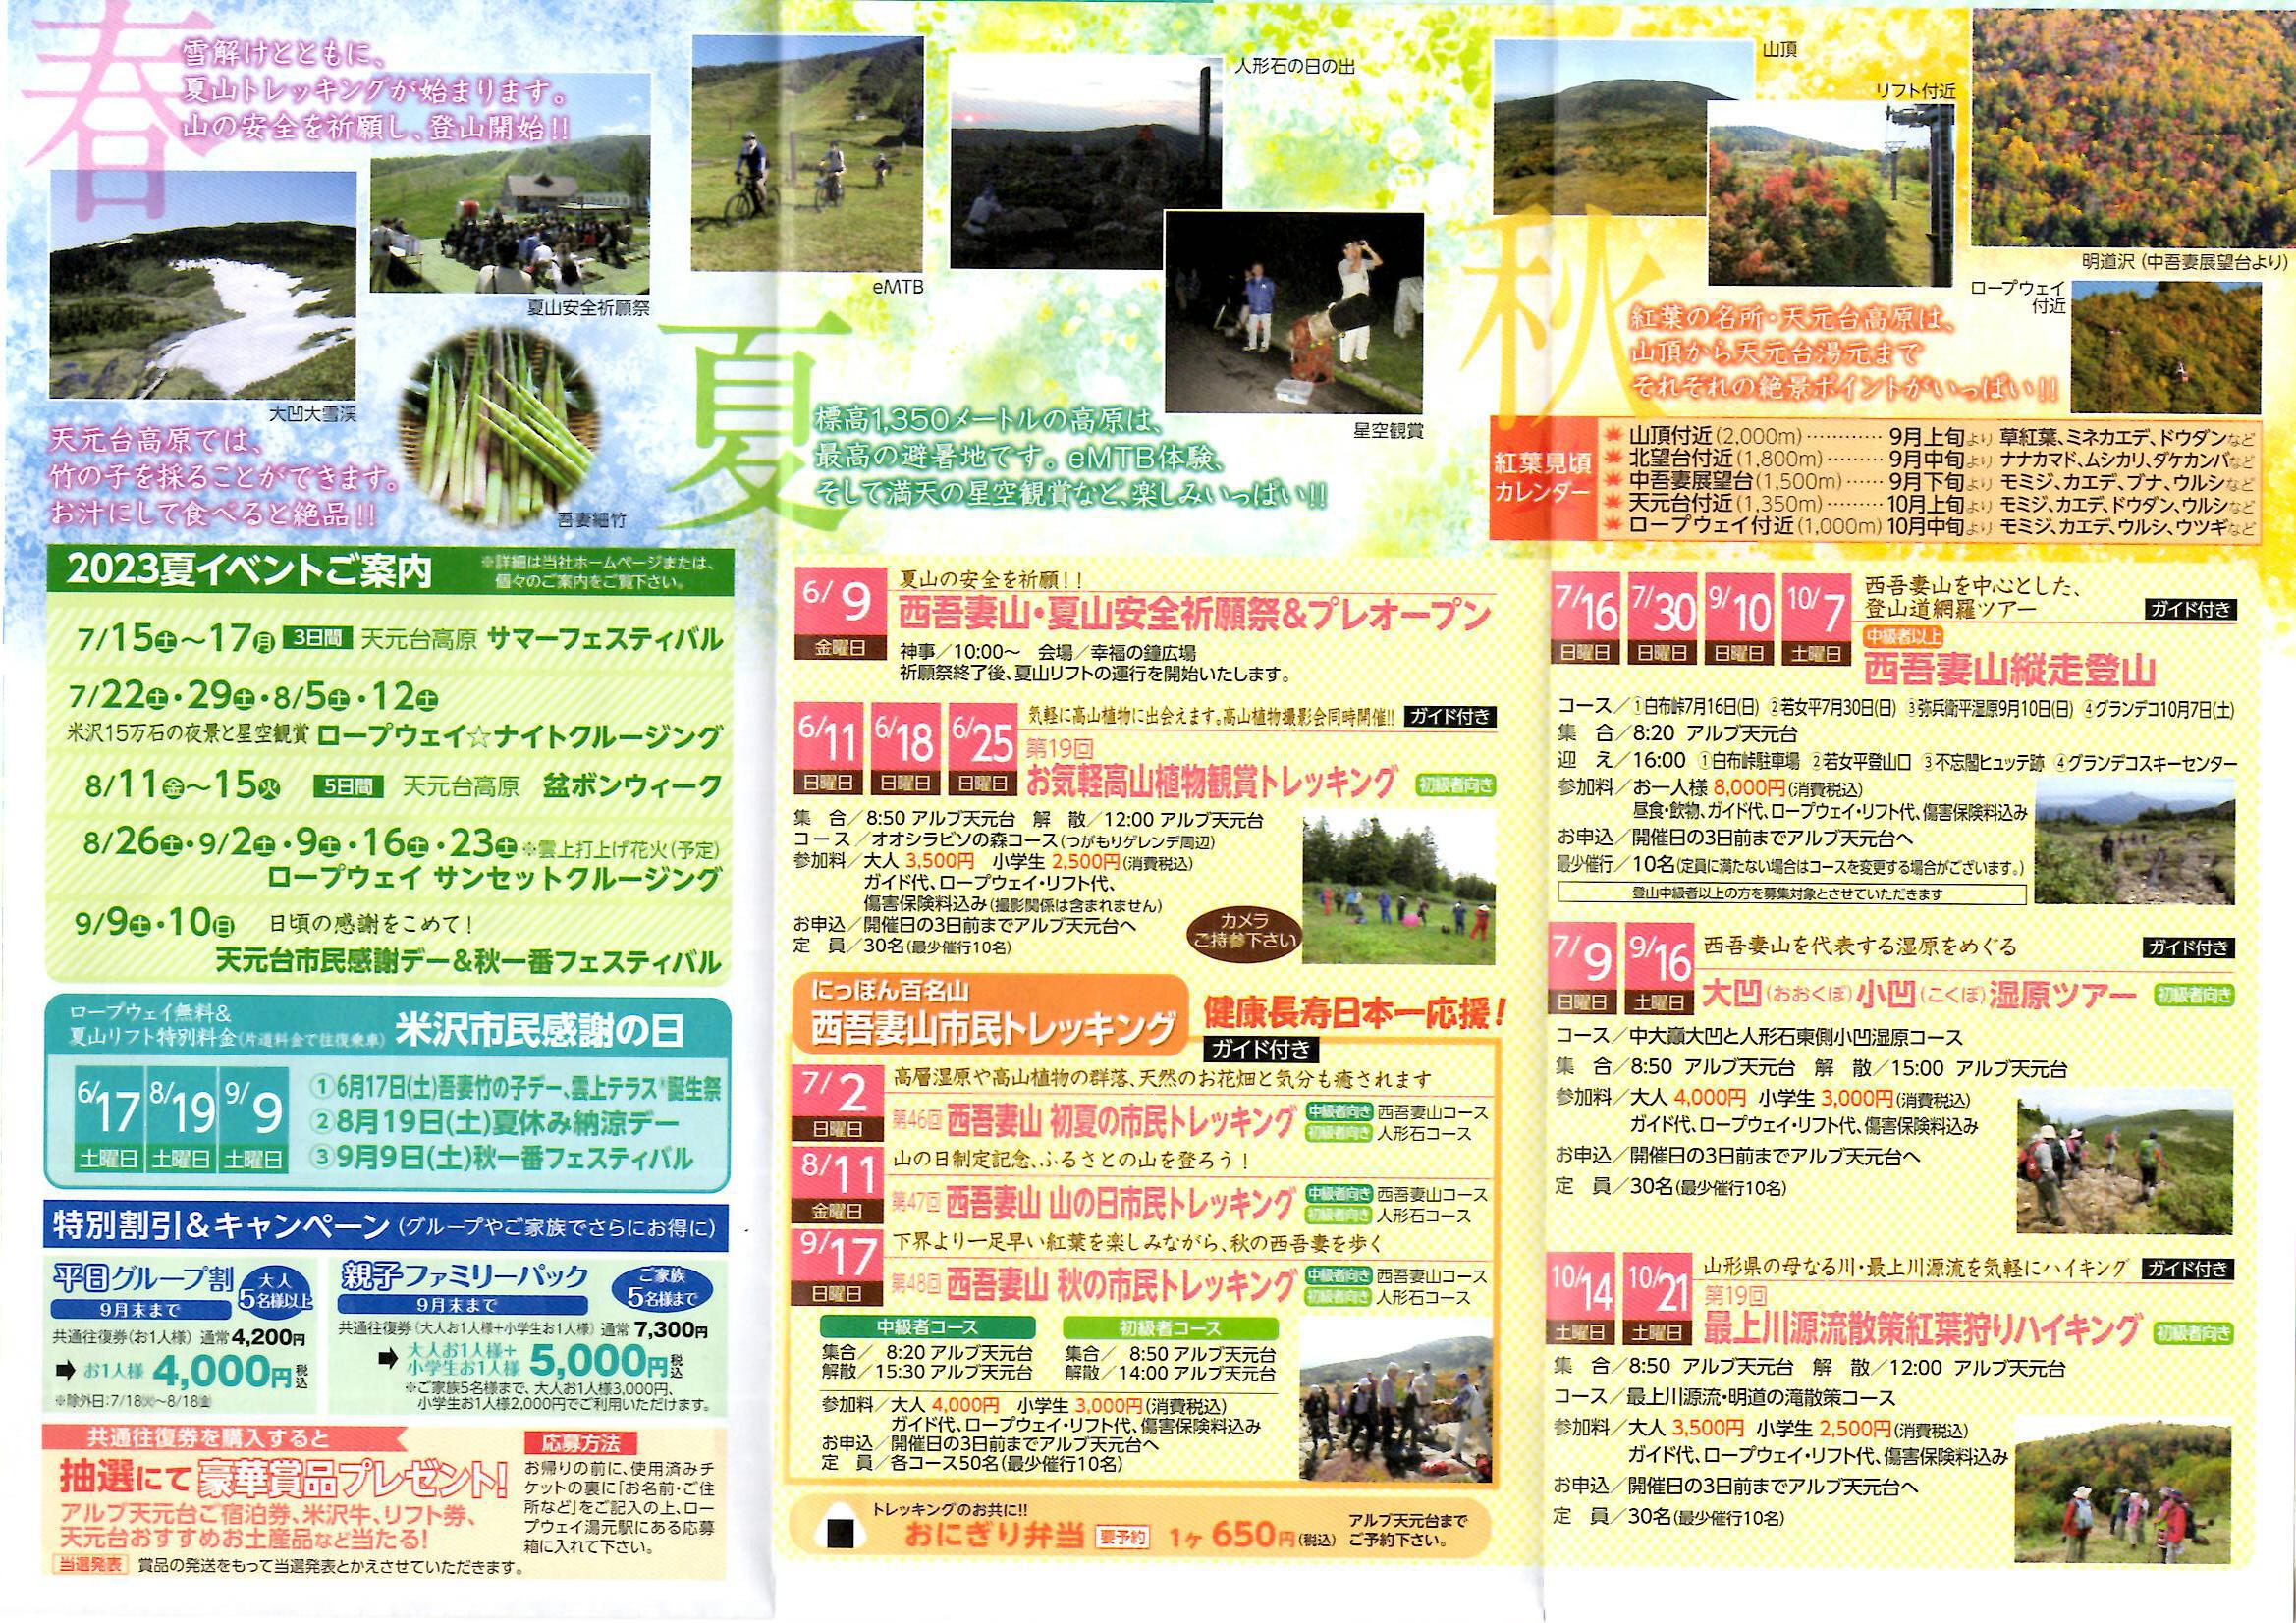 Mt. Nishi-Azuma Opens for the Summer!